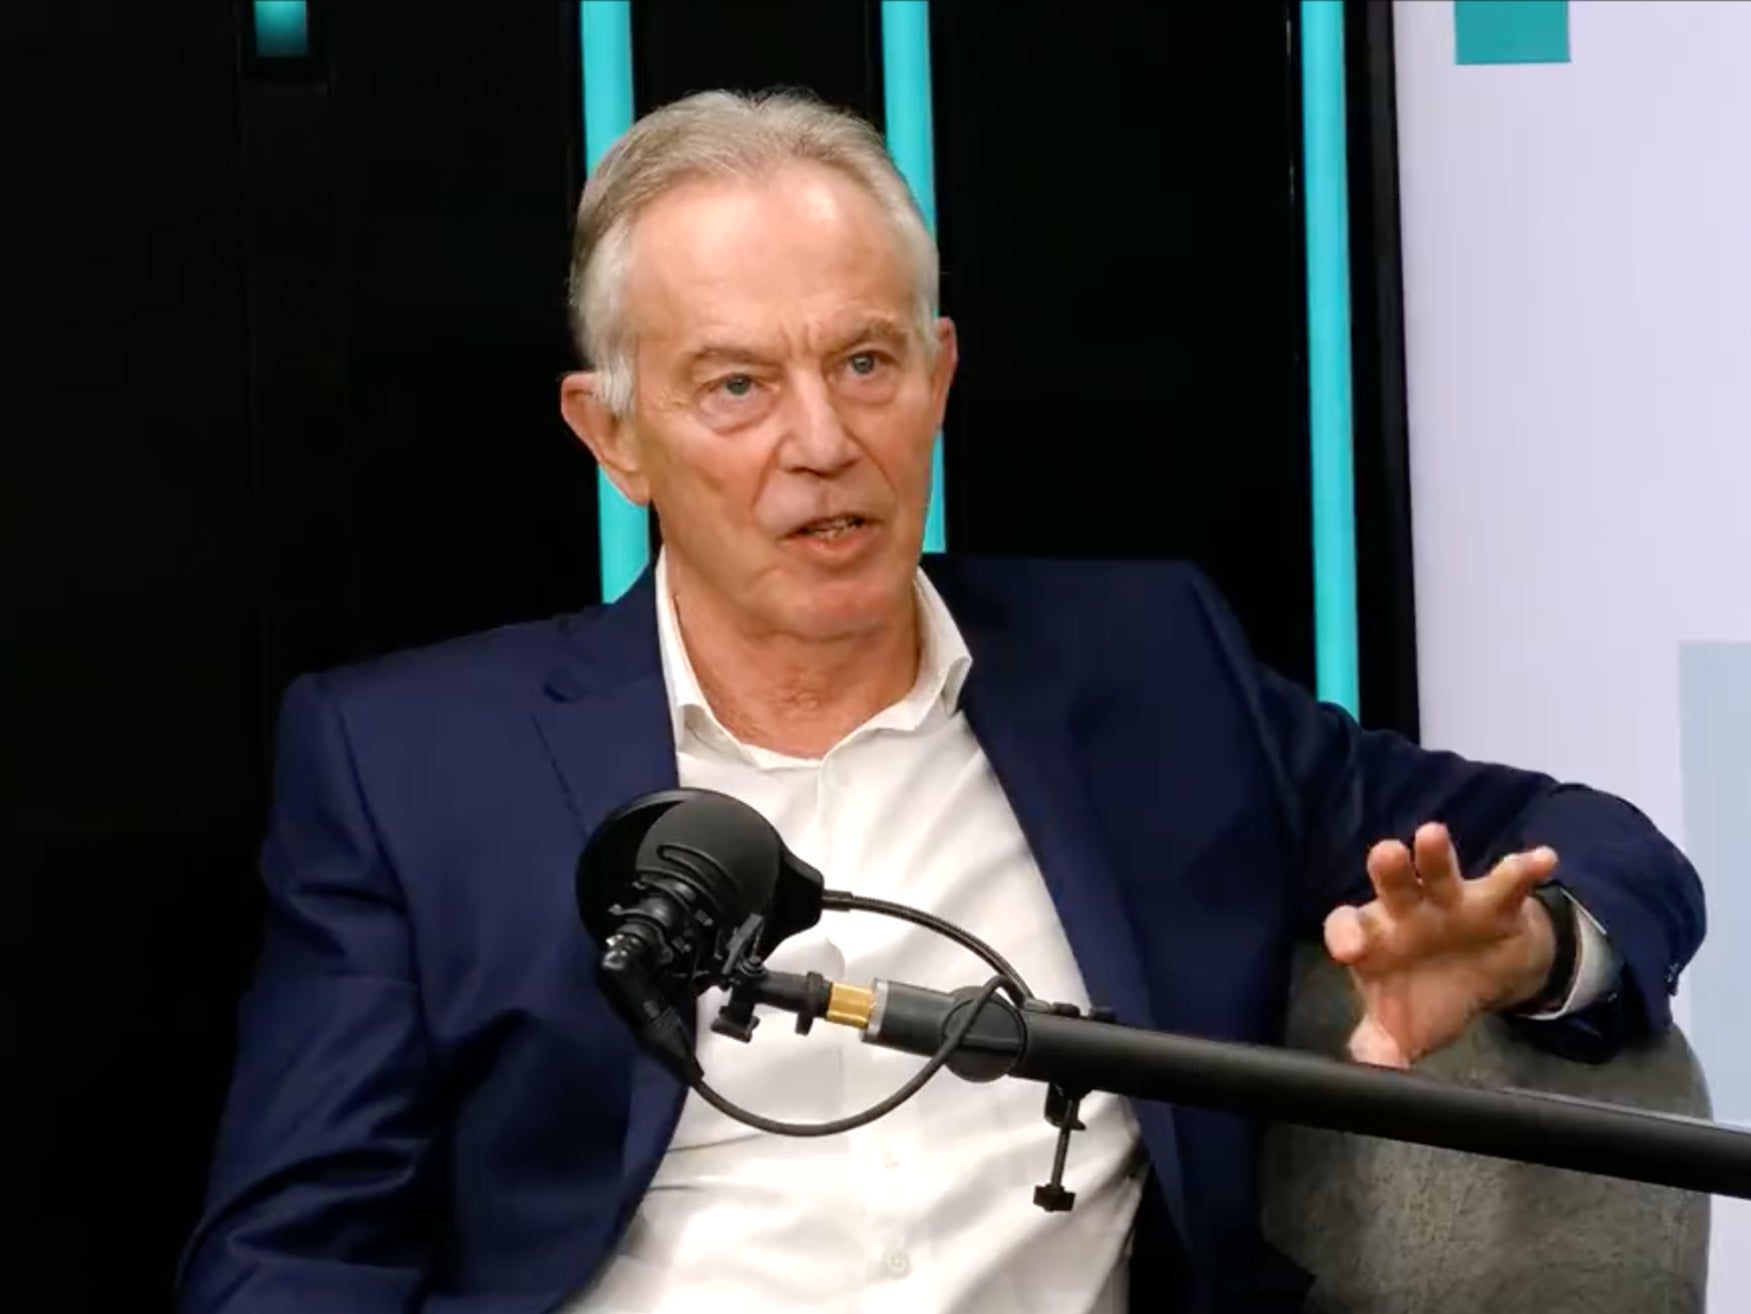 Tony Blair praises Matt Hancock for ‘courageous’ decision to appear on ‘I’m a Celebrity’